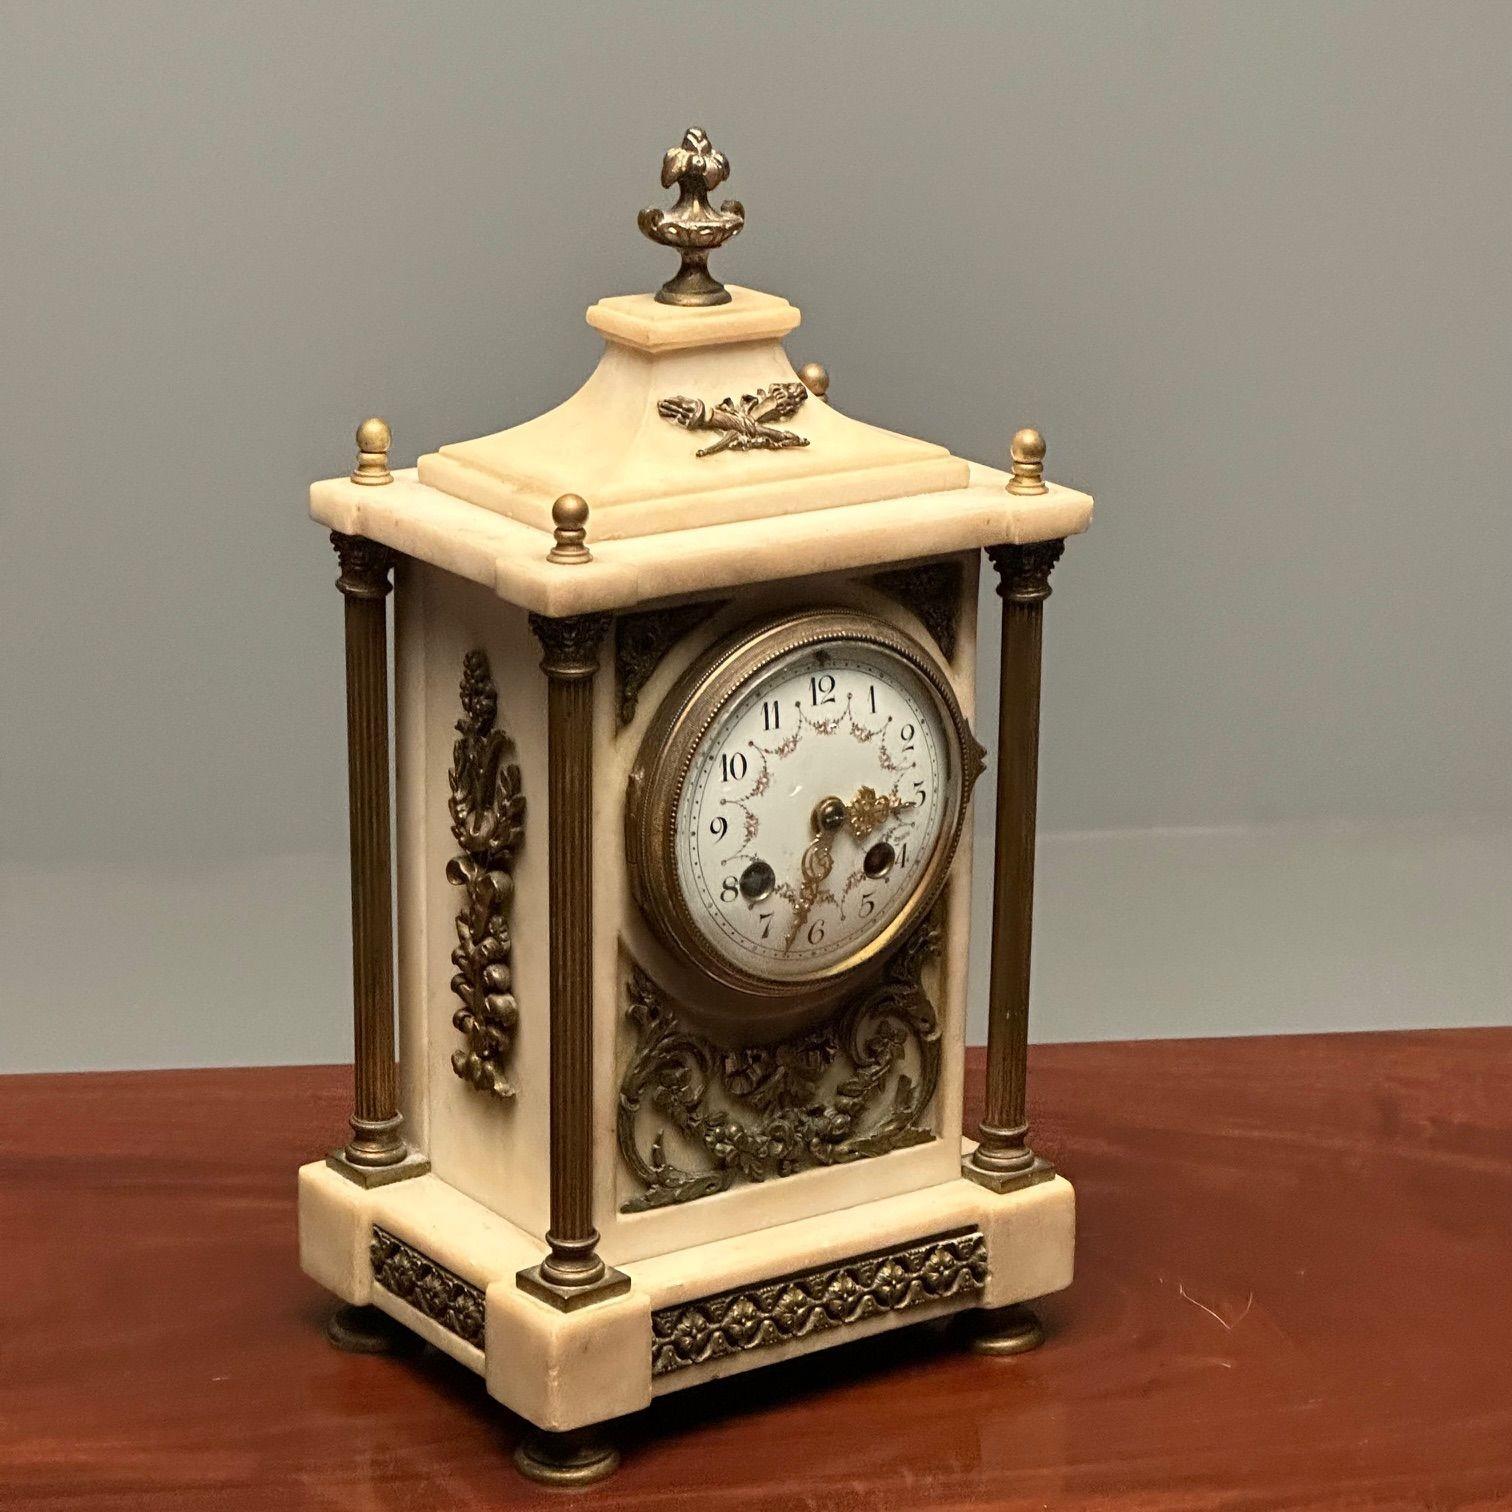 Reloj francés de manto, ménsula o sobremesa, mármol y bronce, s. XIX, firmado en Francia Francés en venta